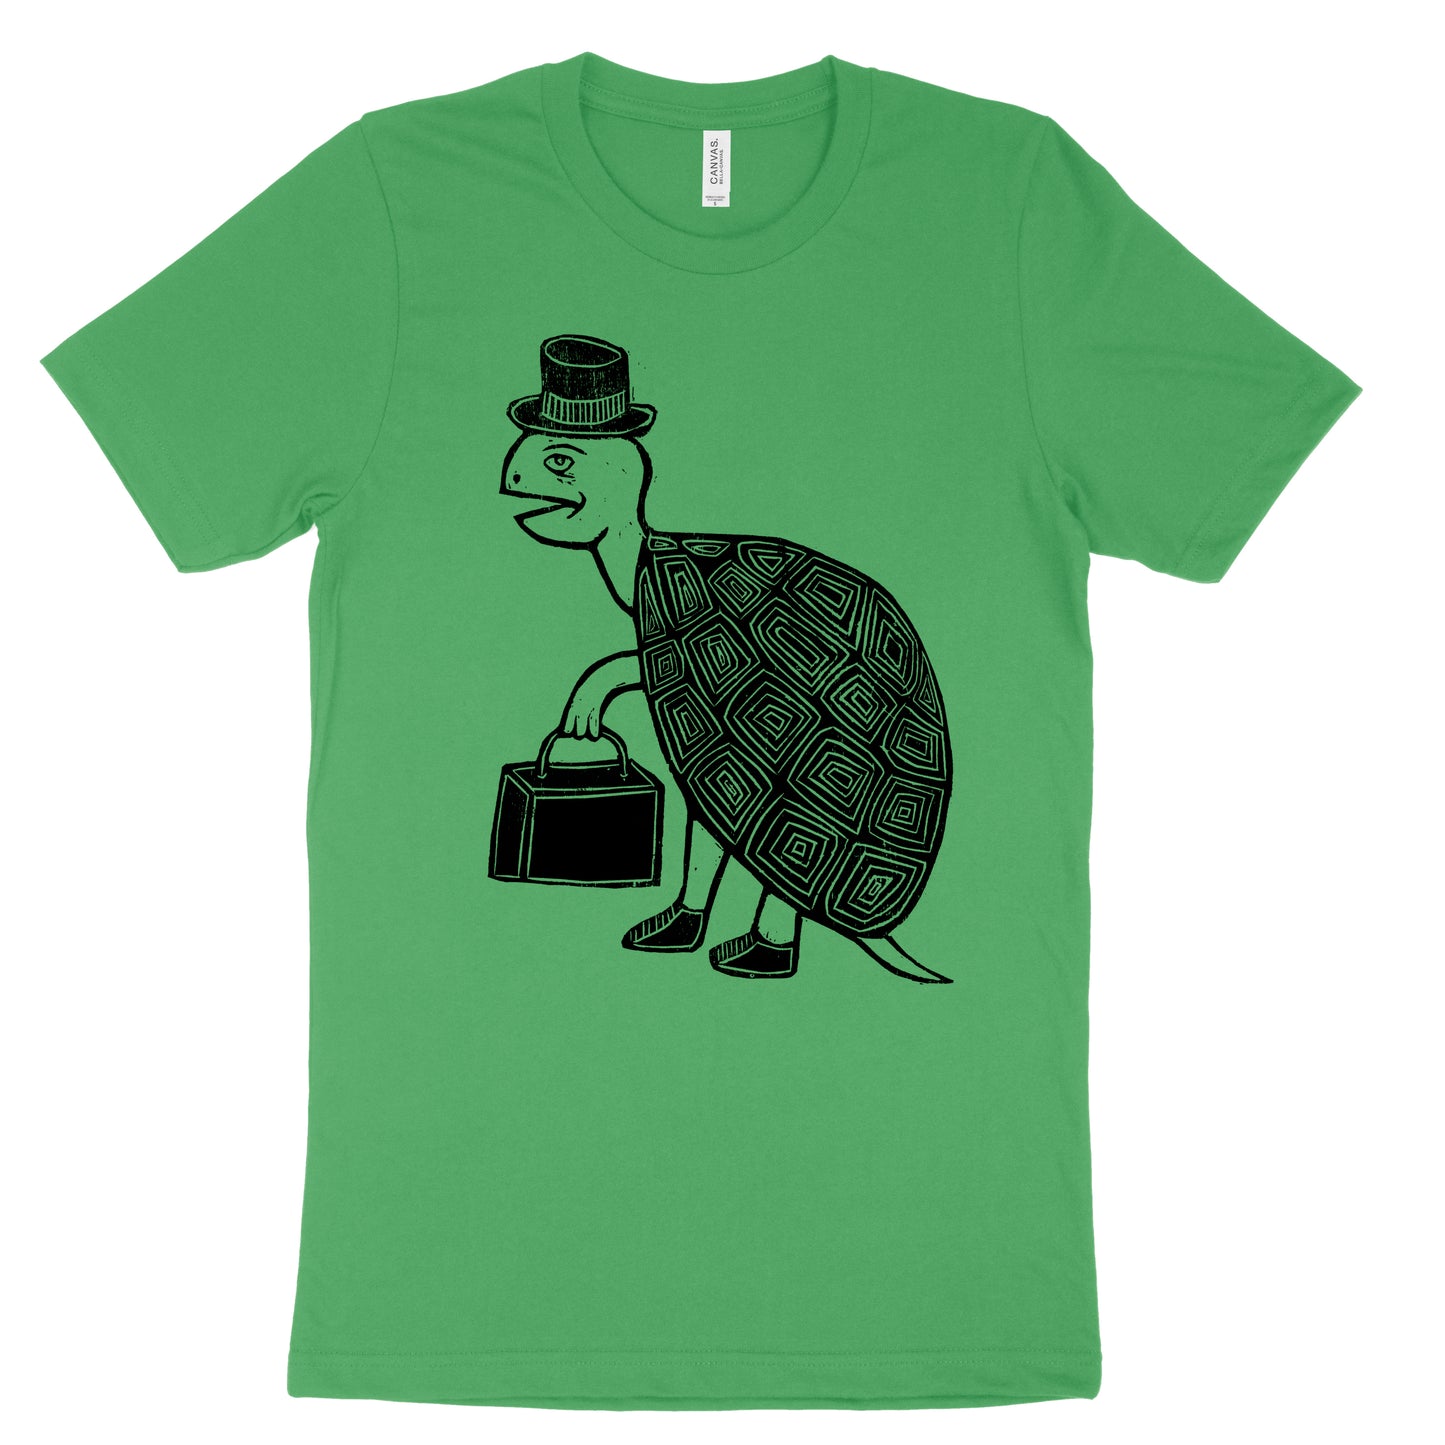 Tophat Turtle Woodcut Printed T-Shirt